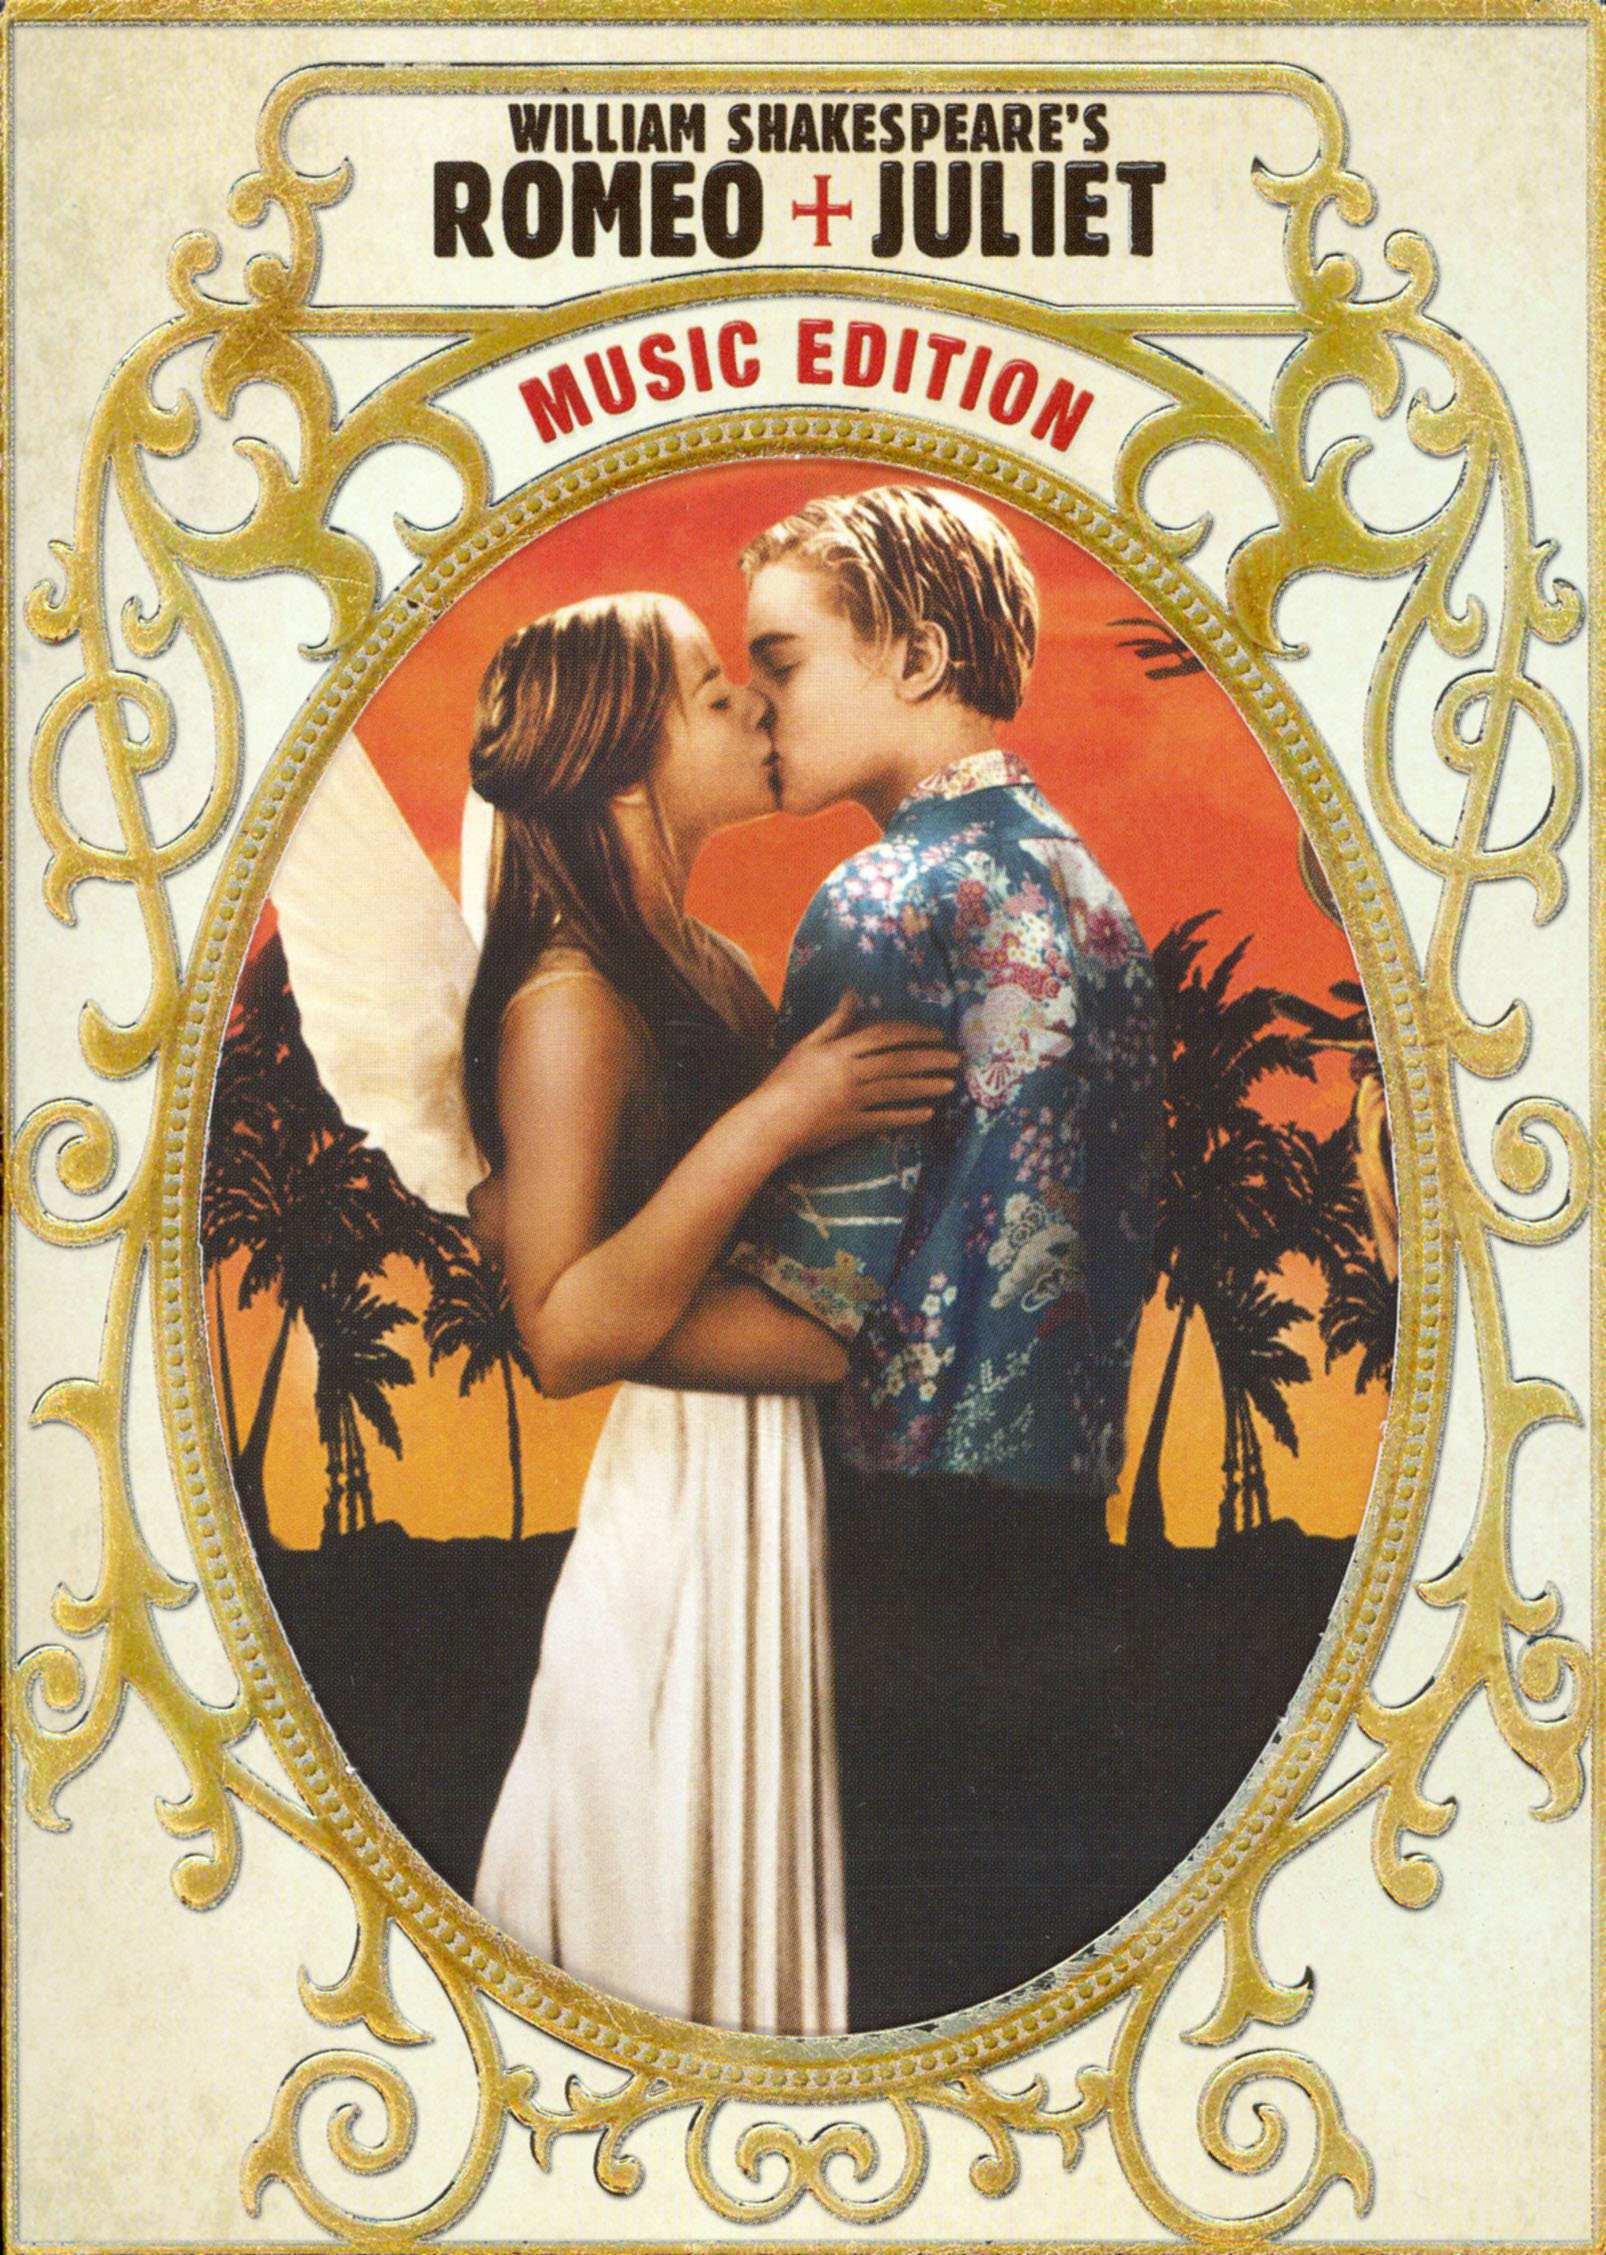 William Shakespeare's Romeo + Juliet [Music Edition] [DVD] [1996]